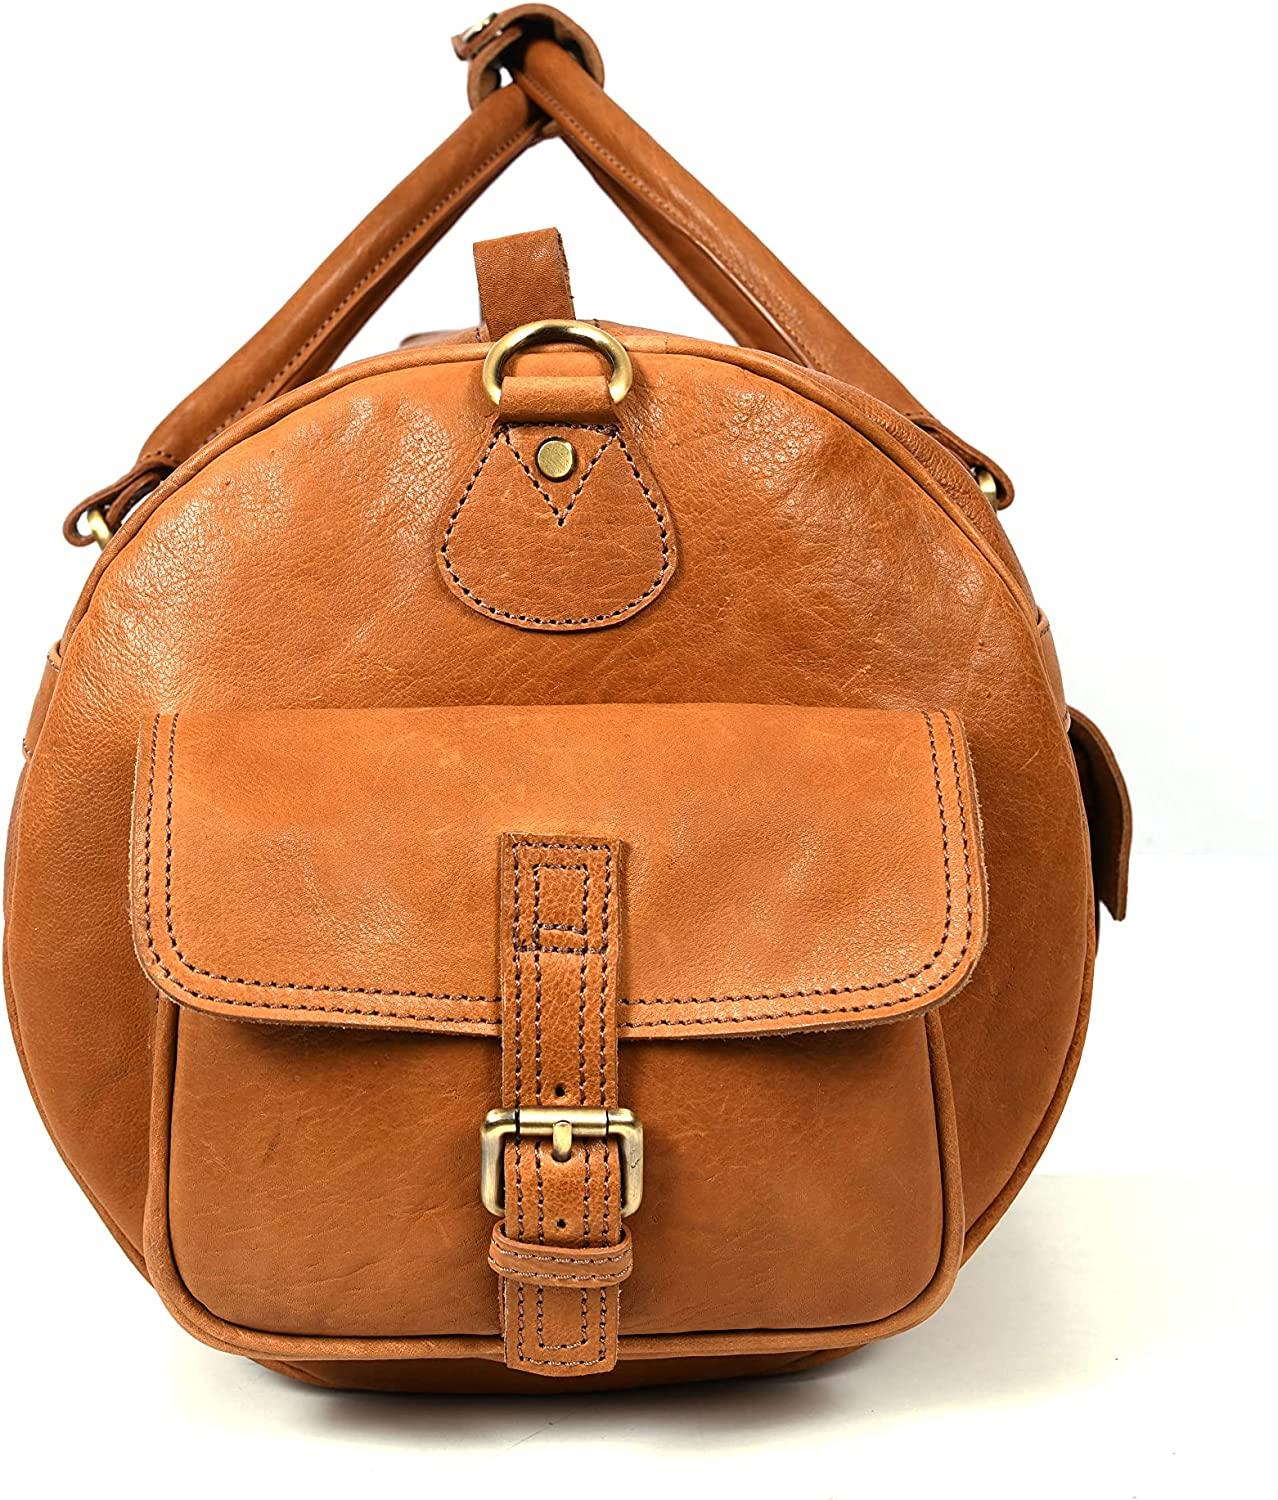 Rustic Brown Duffel Bags - FR Fashion Co.